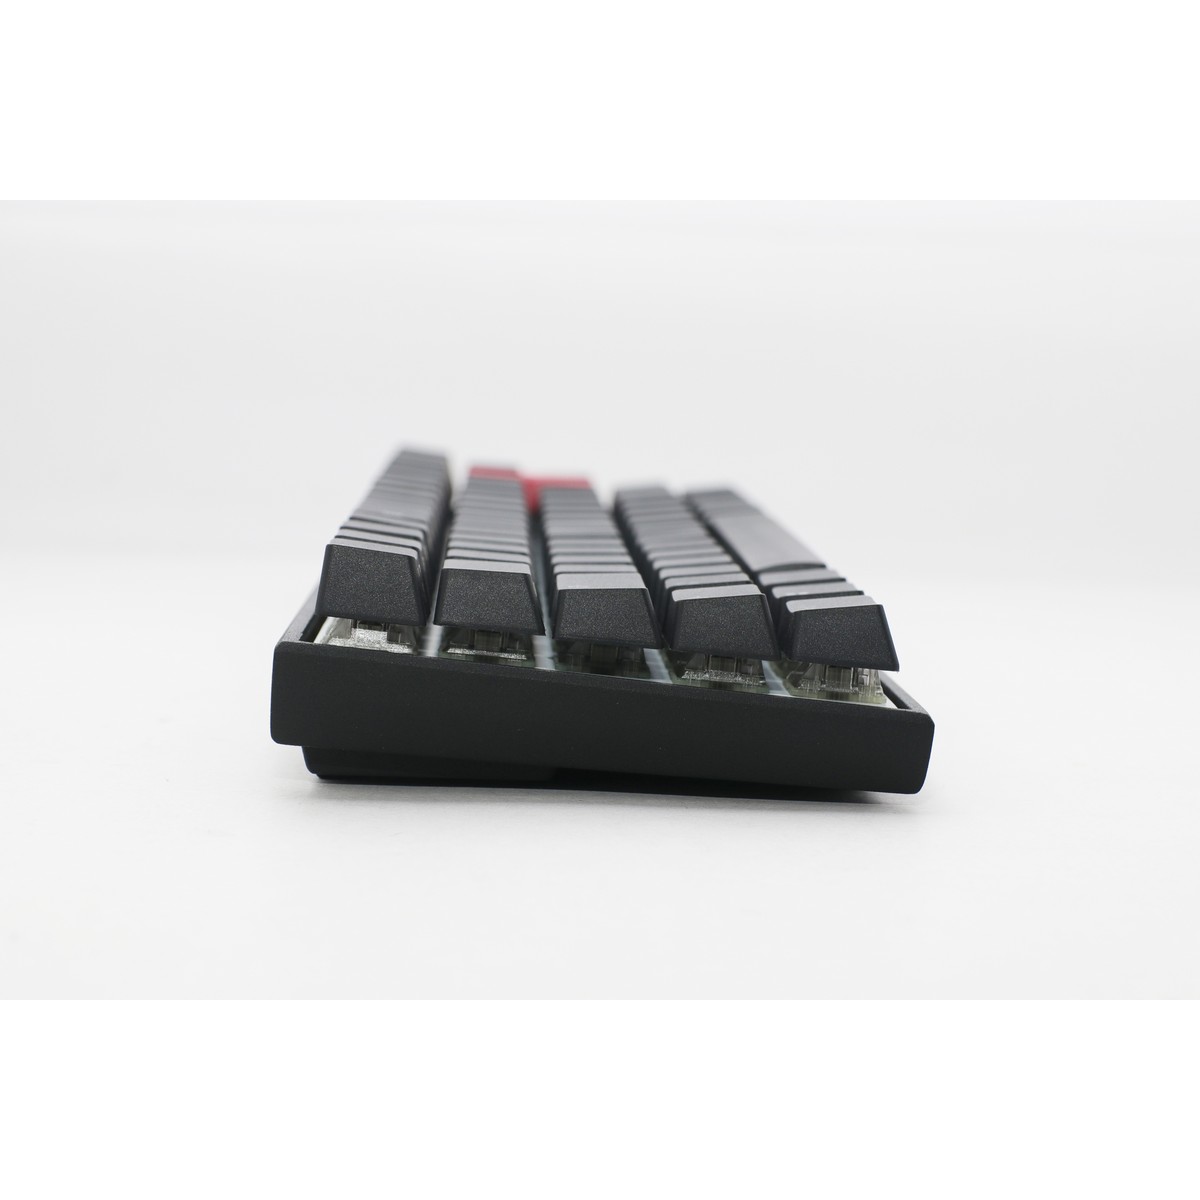 Ducky - Ducky Mecha Pro SF 65% USB RGB Mechanical Gaming Keyboard Cherry MX Blue - UK La